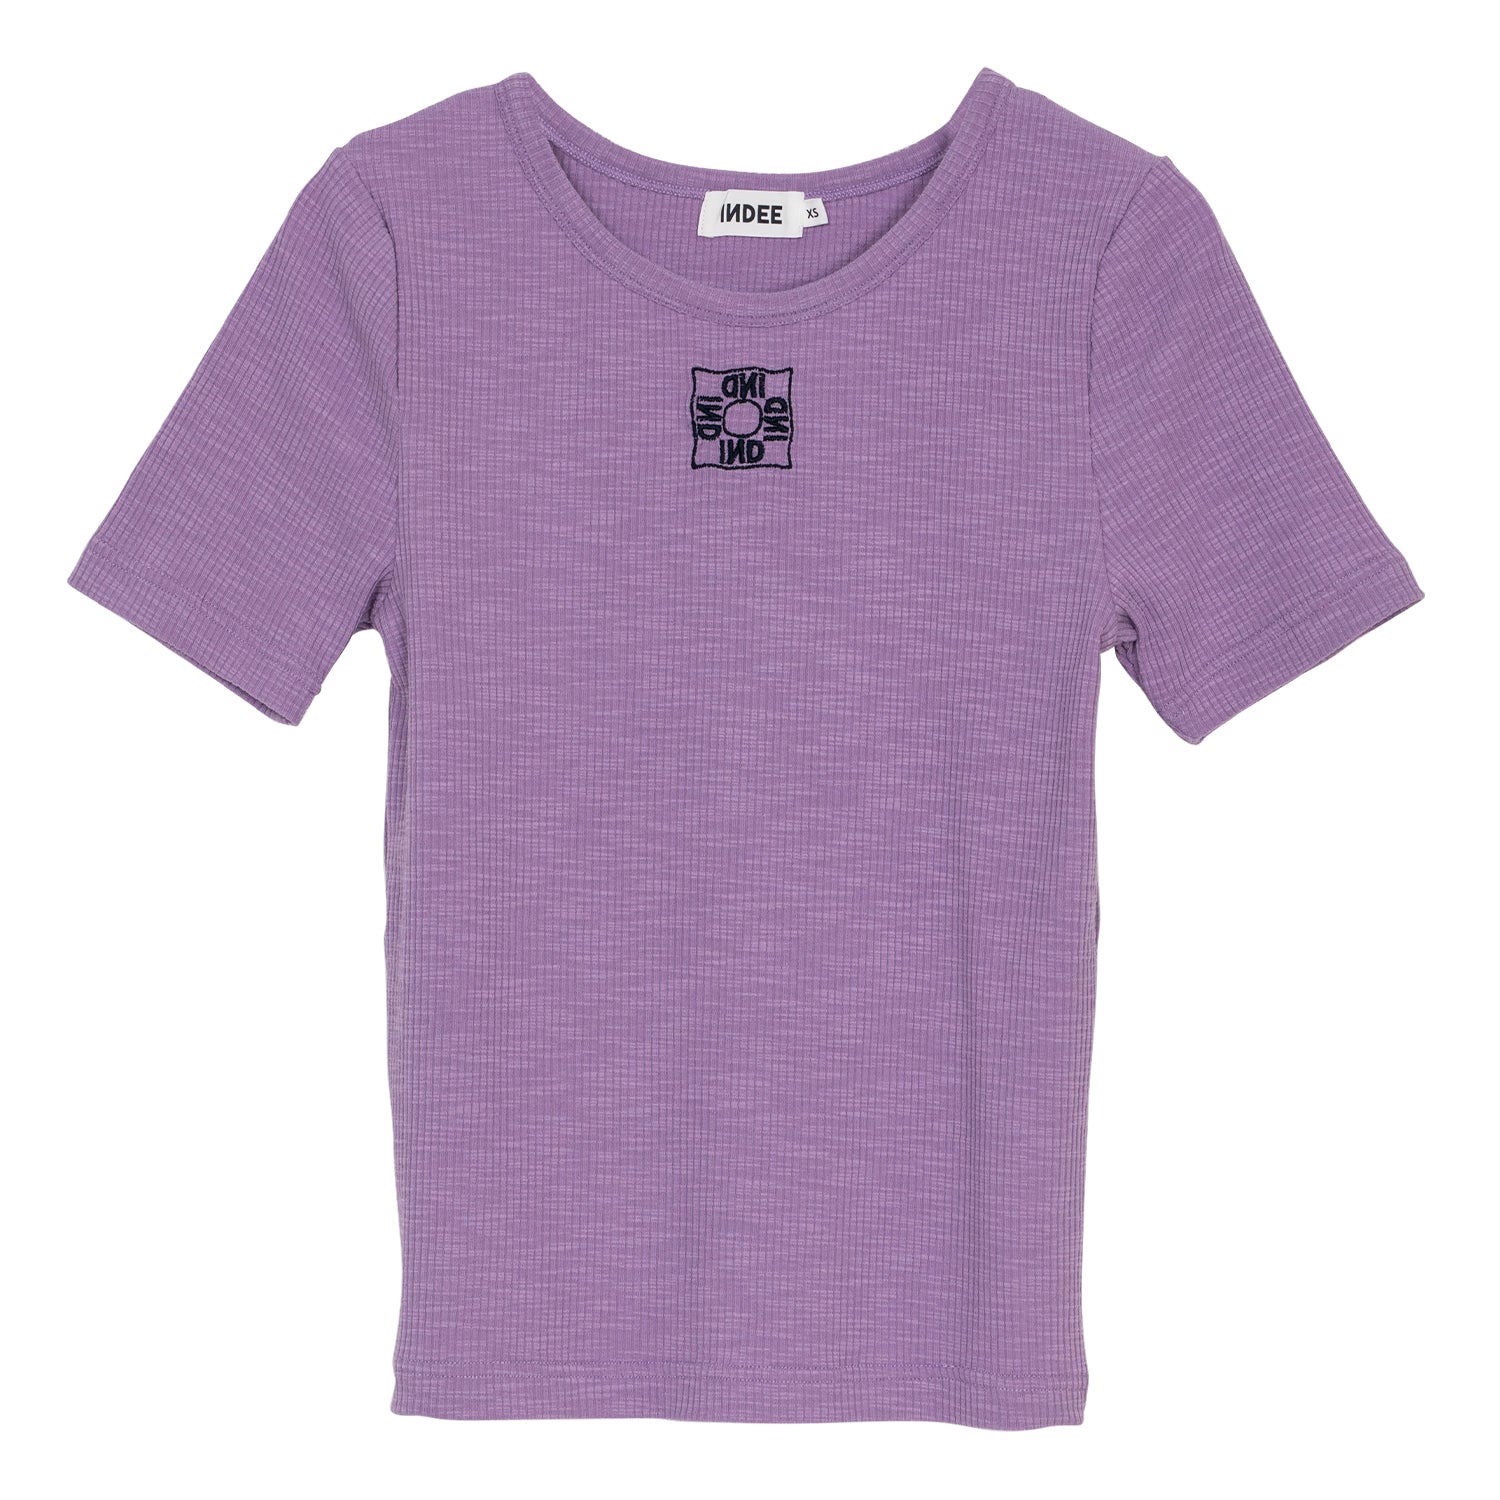 Indee Ribbed Logo T-Shirt - Lilac